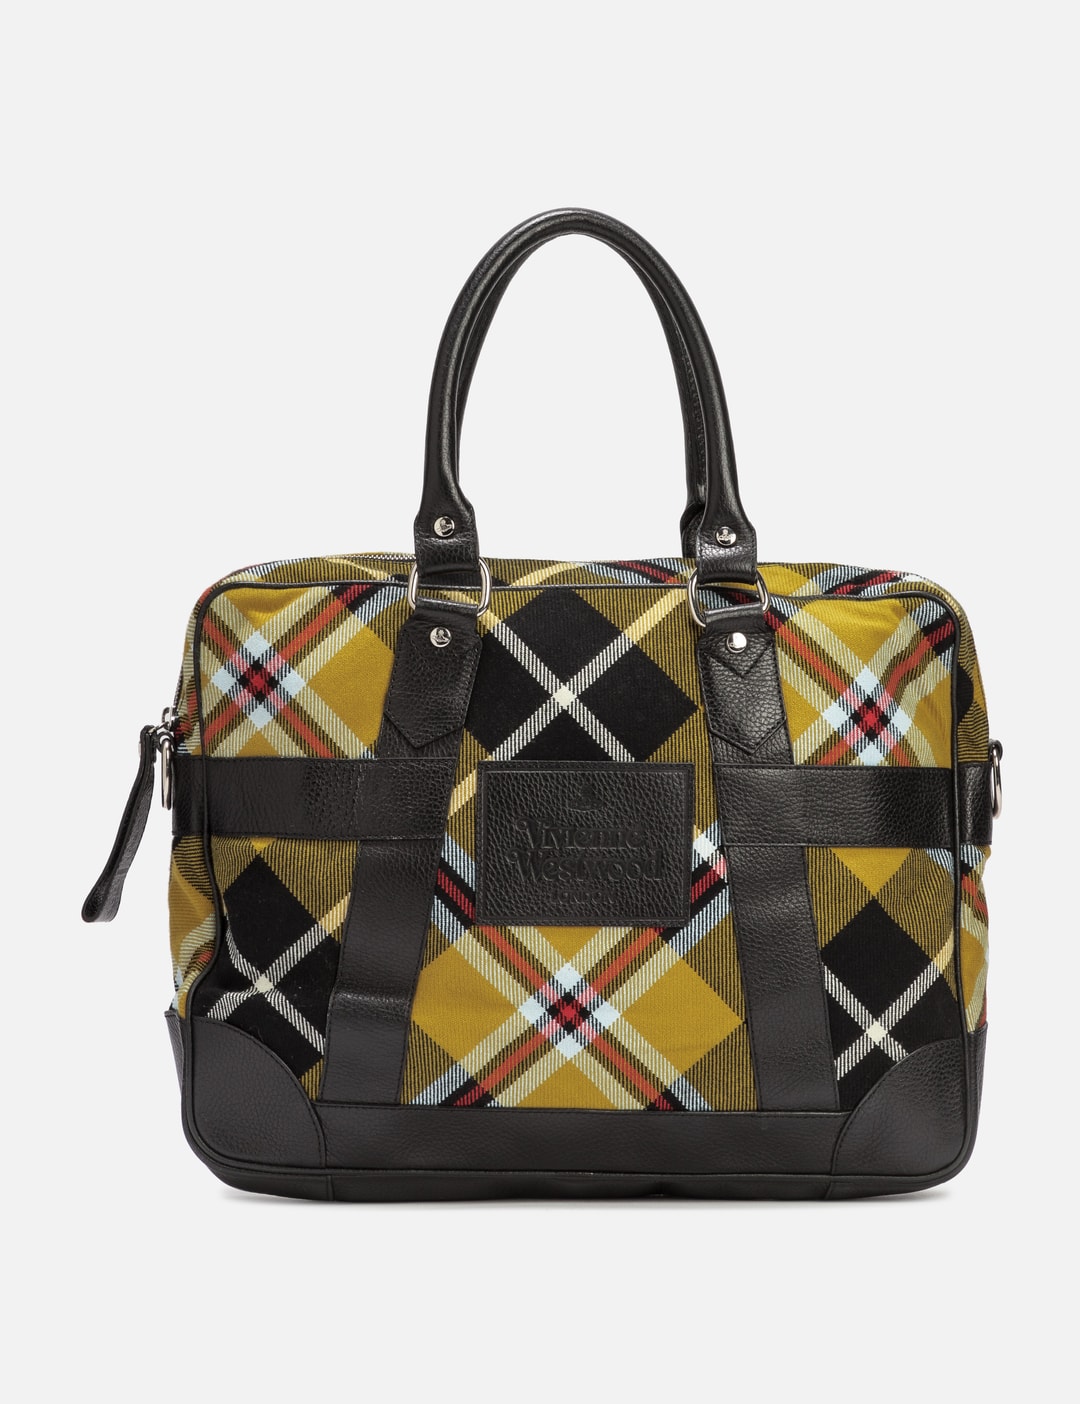 Vivienne Westwood Adjustable Strap Handbags